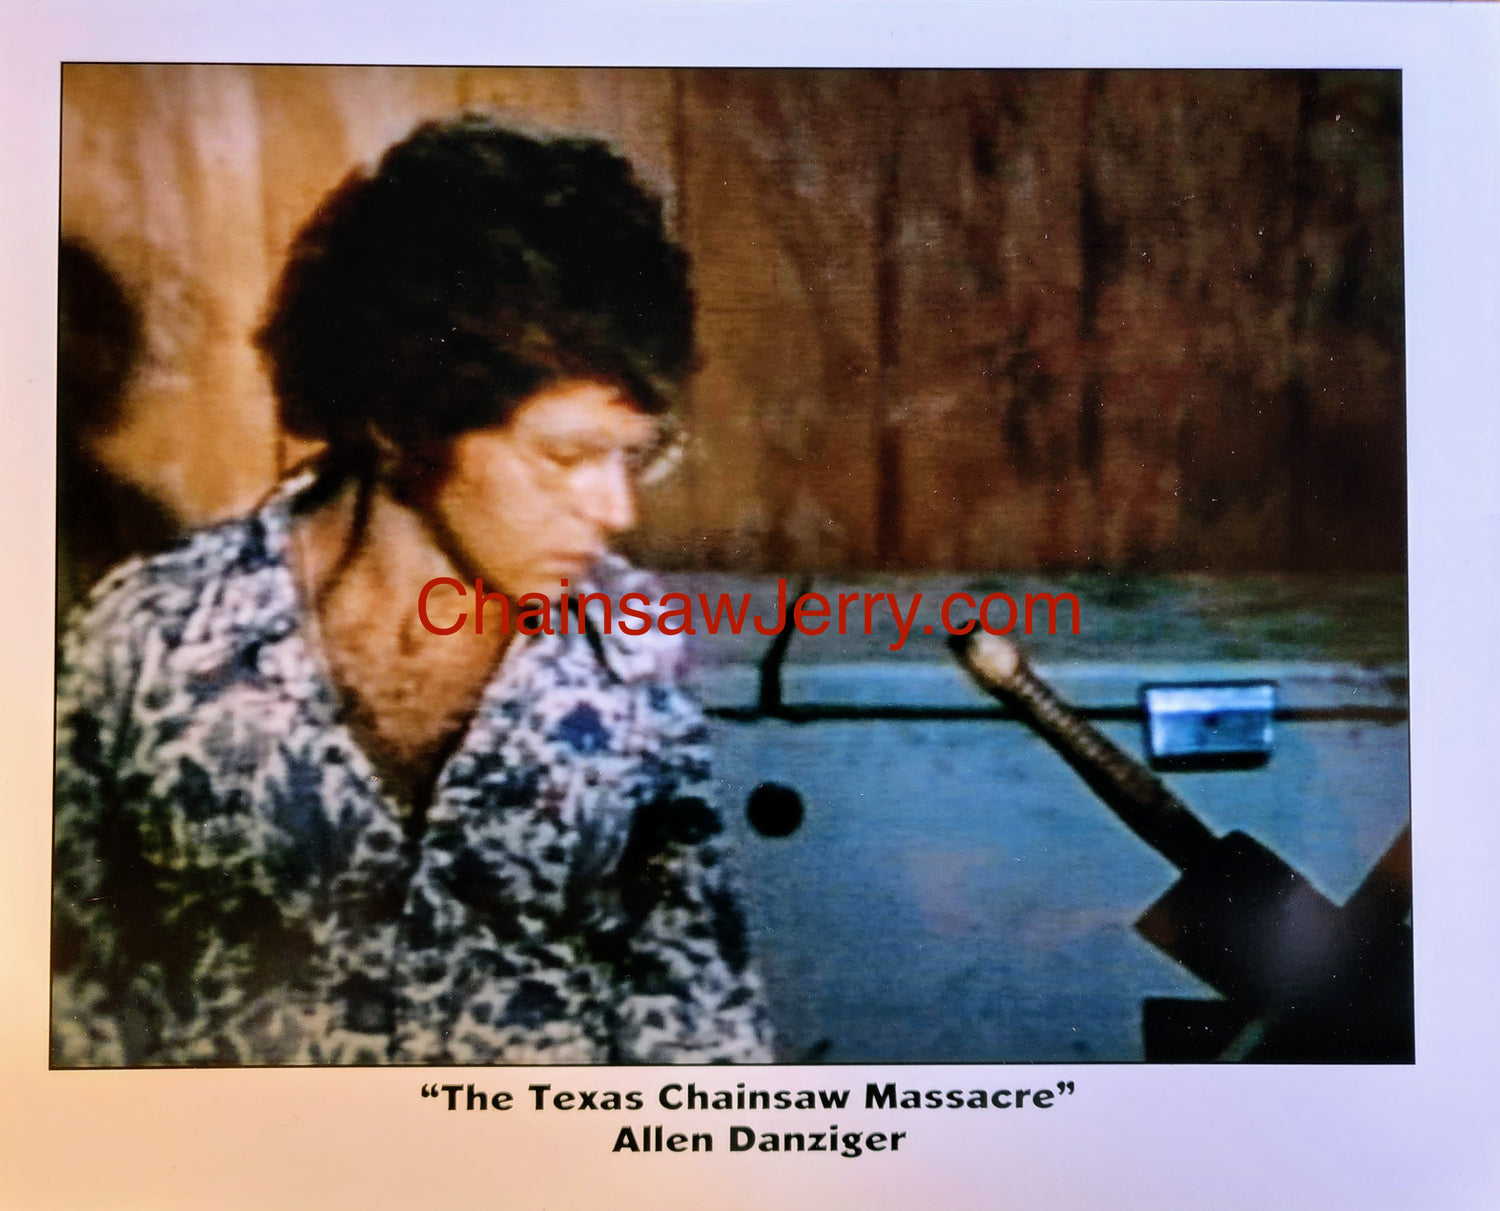 Texas Chainsaw Massacre Autographed Photos